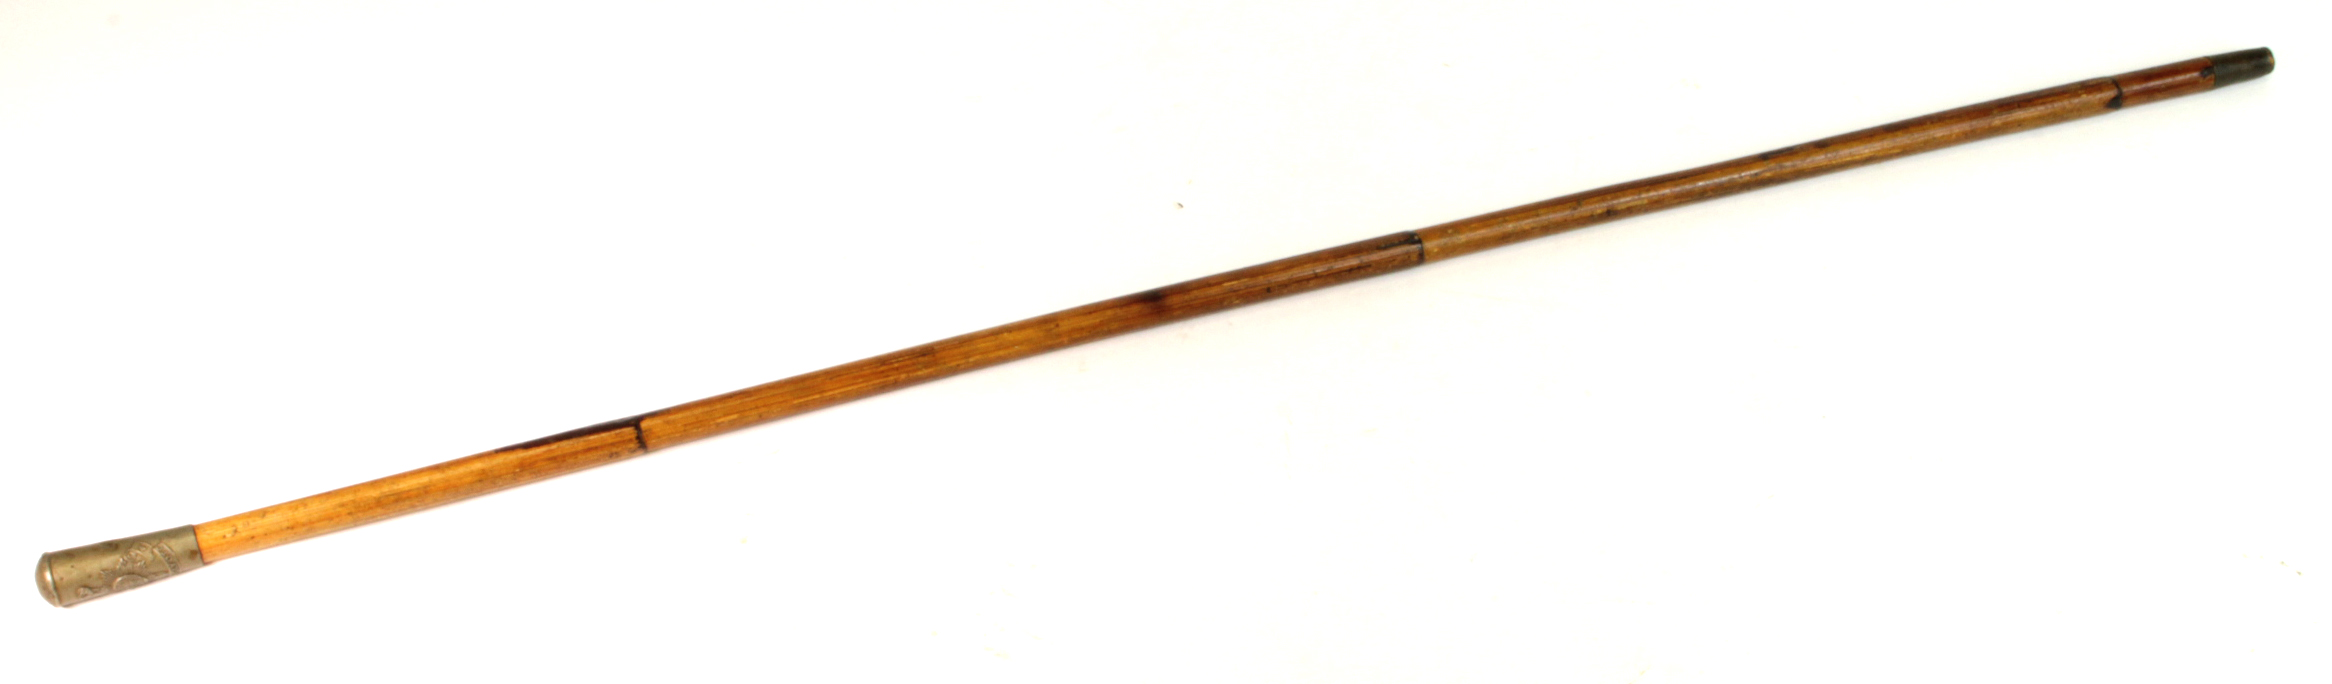 Ardingly OTC swagger stick, likely WW1 era